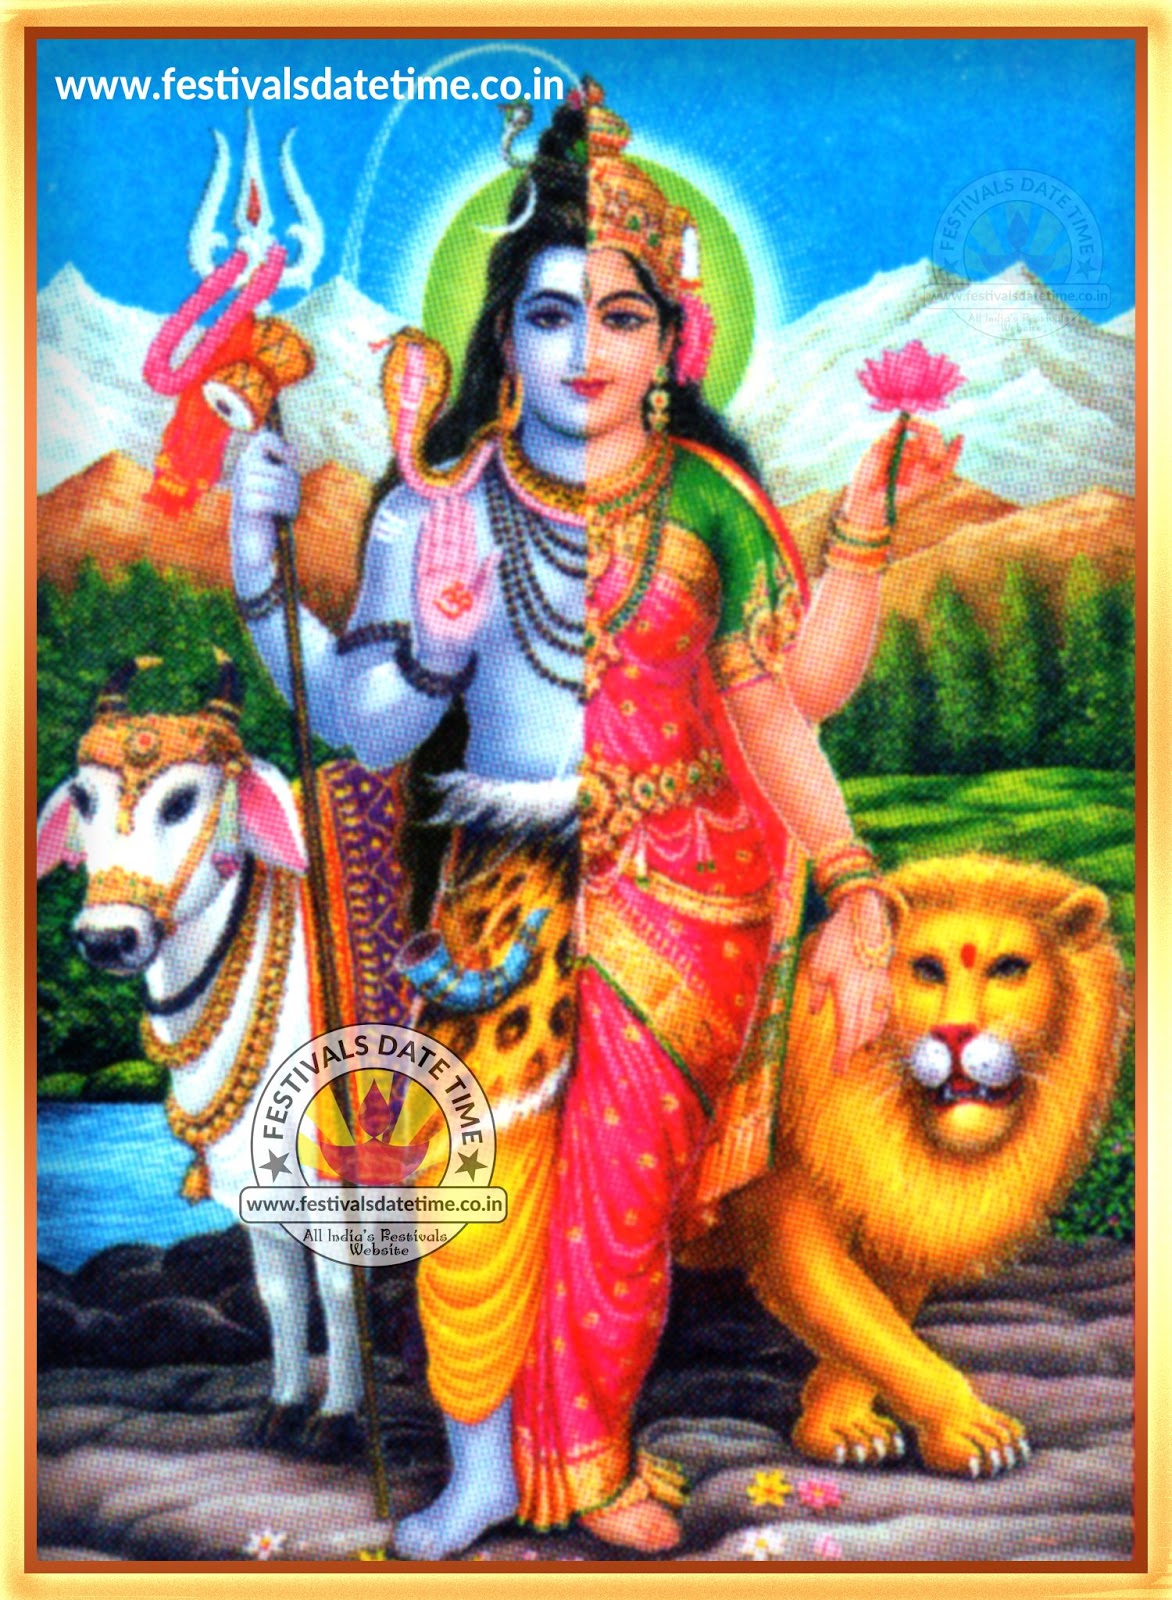 Lord Shiva Wallpaper Free Download भगवन शव क फट डउनलड कजय   Festivals Date Time